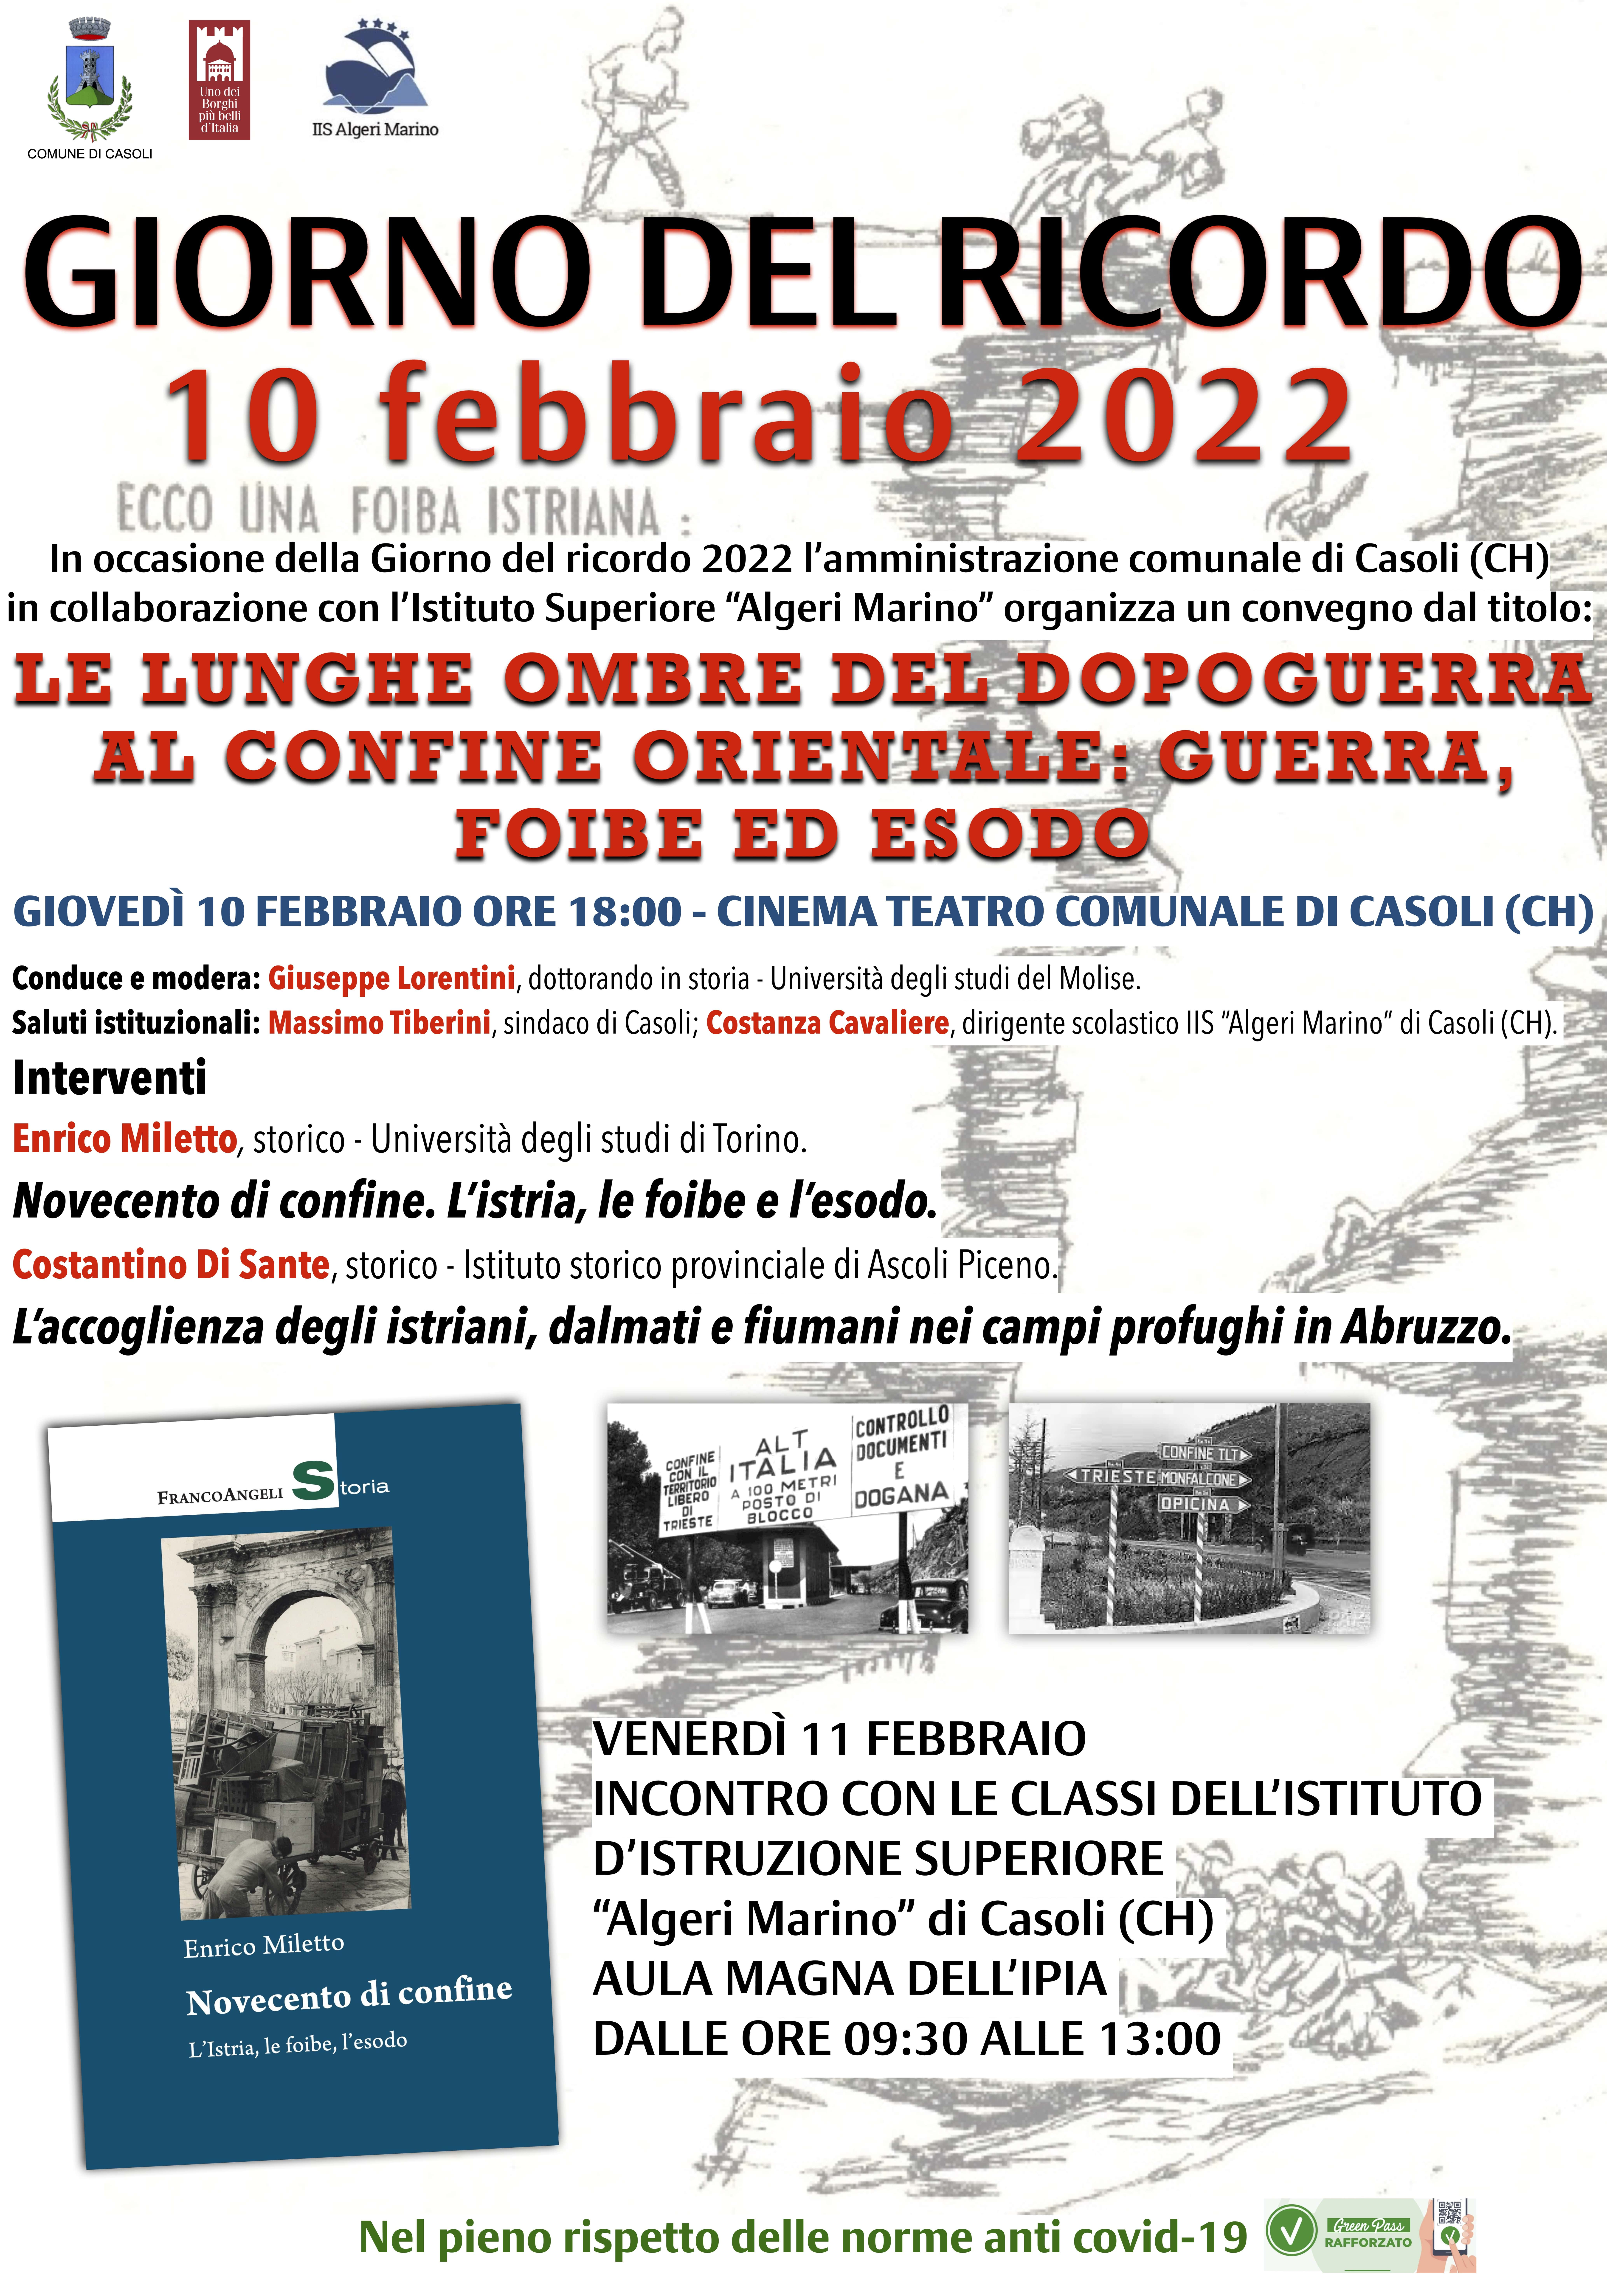 Ricordo foibe - Manifesto 10 febbraio 2022